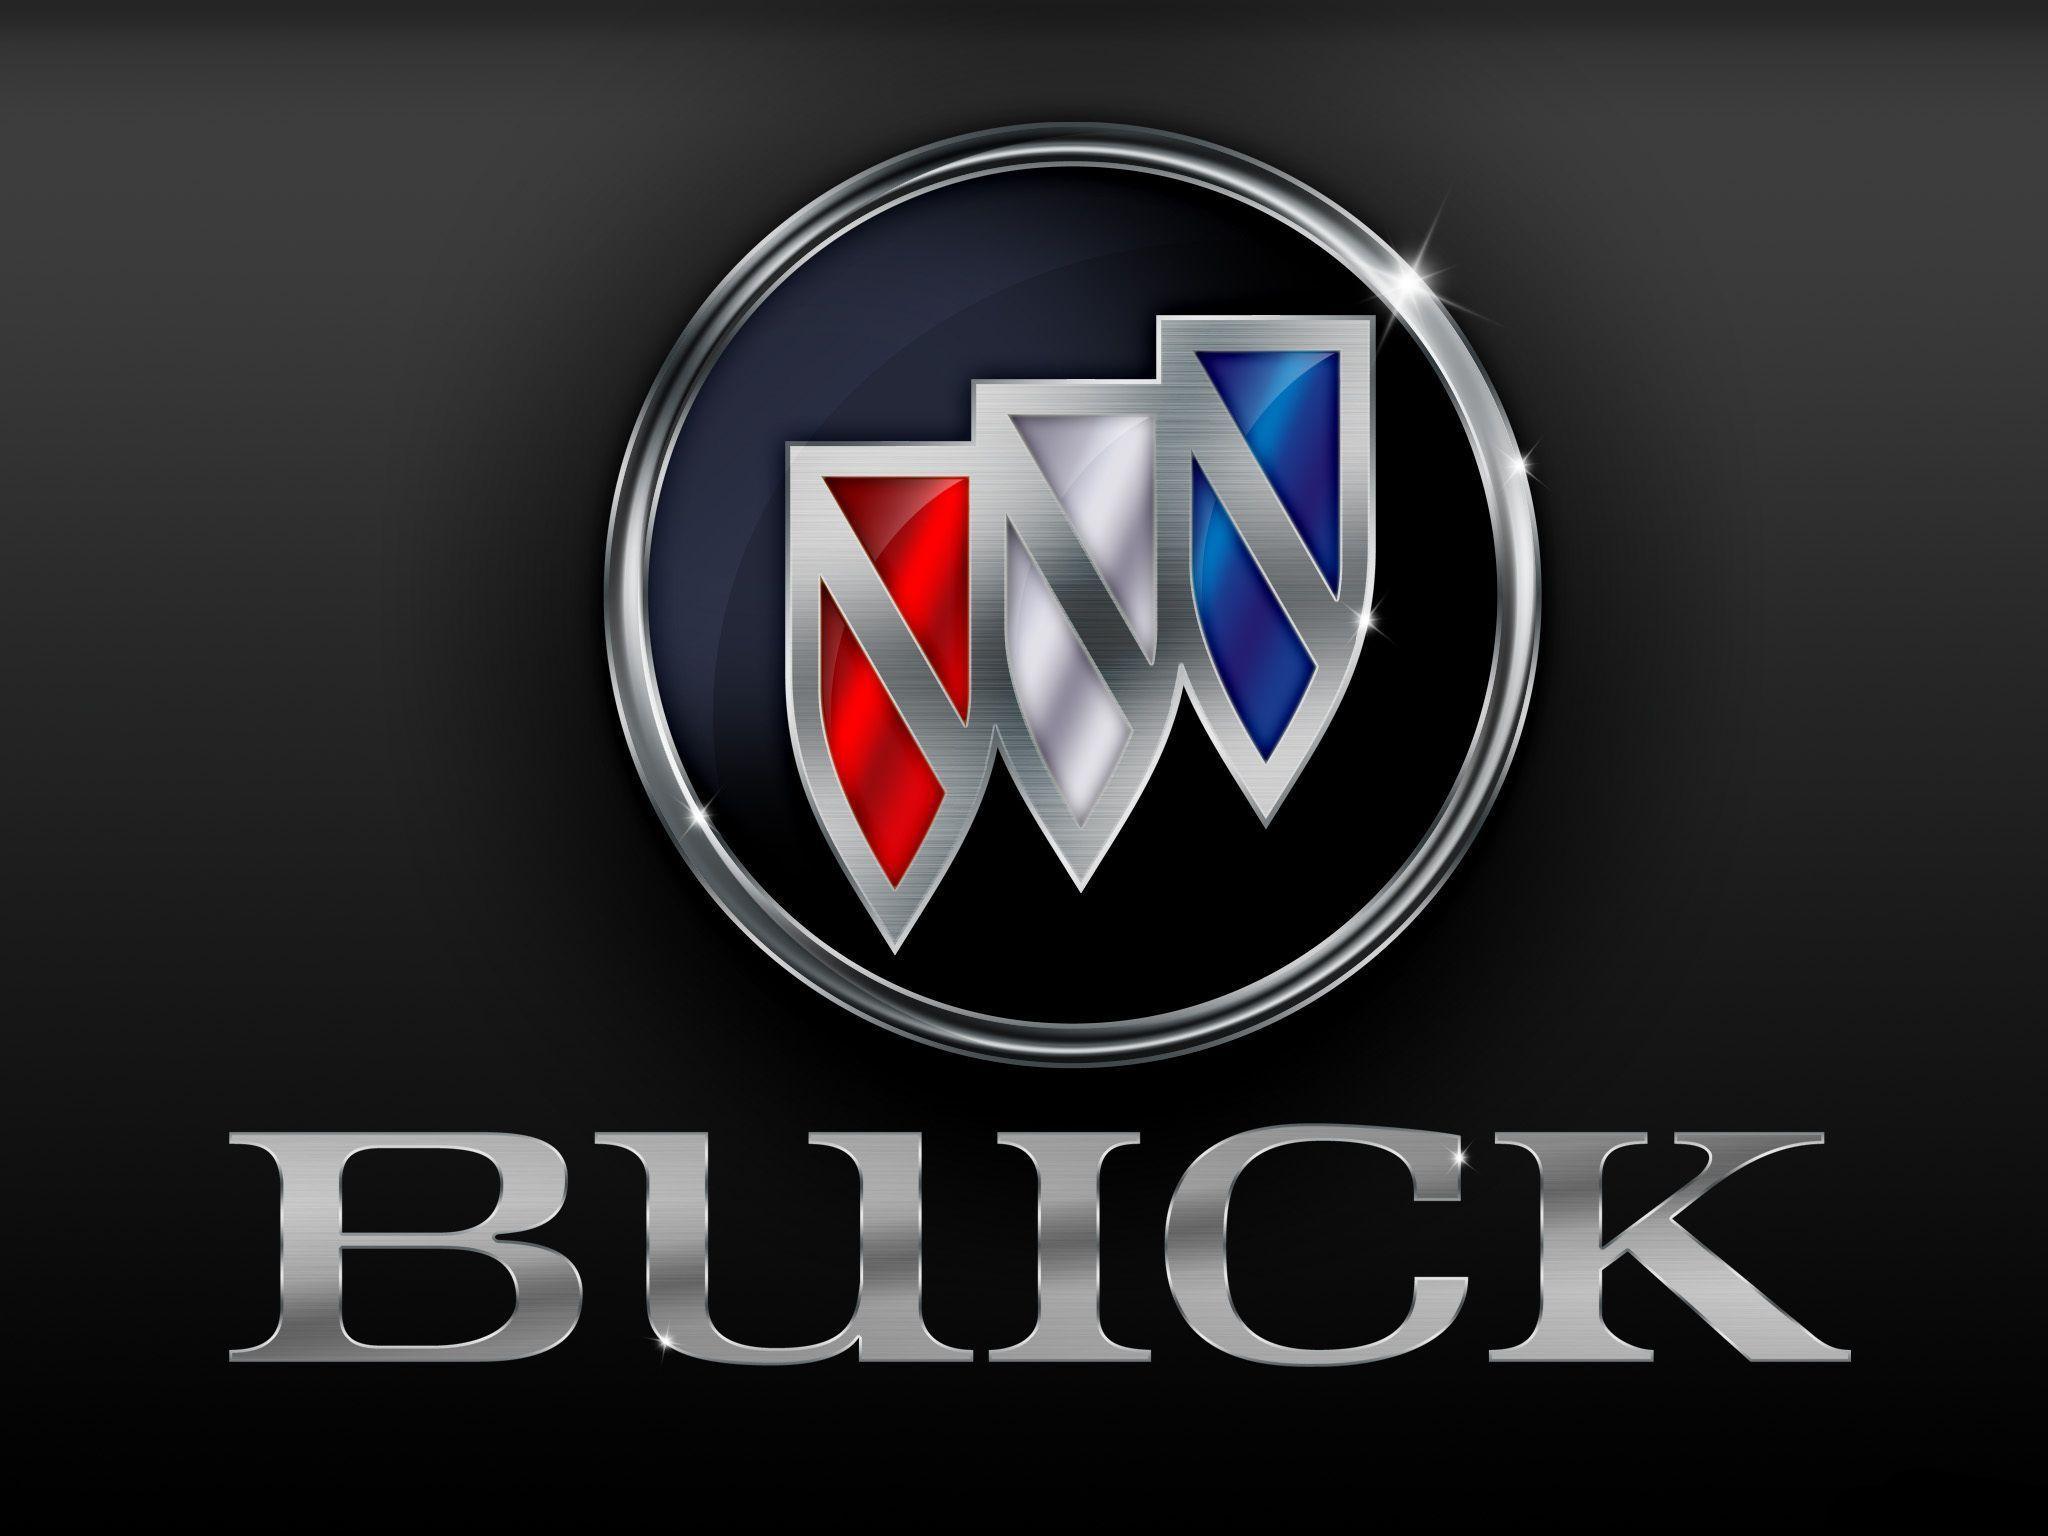 Buick Century Logo - Buick Logo, Buick Car Symbol Meaning and History | Car Brand Names.com